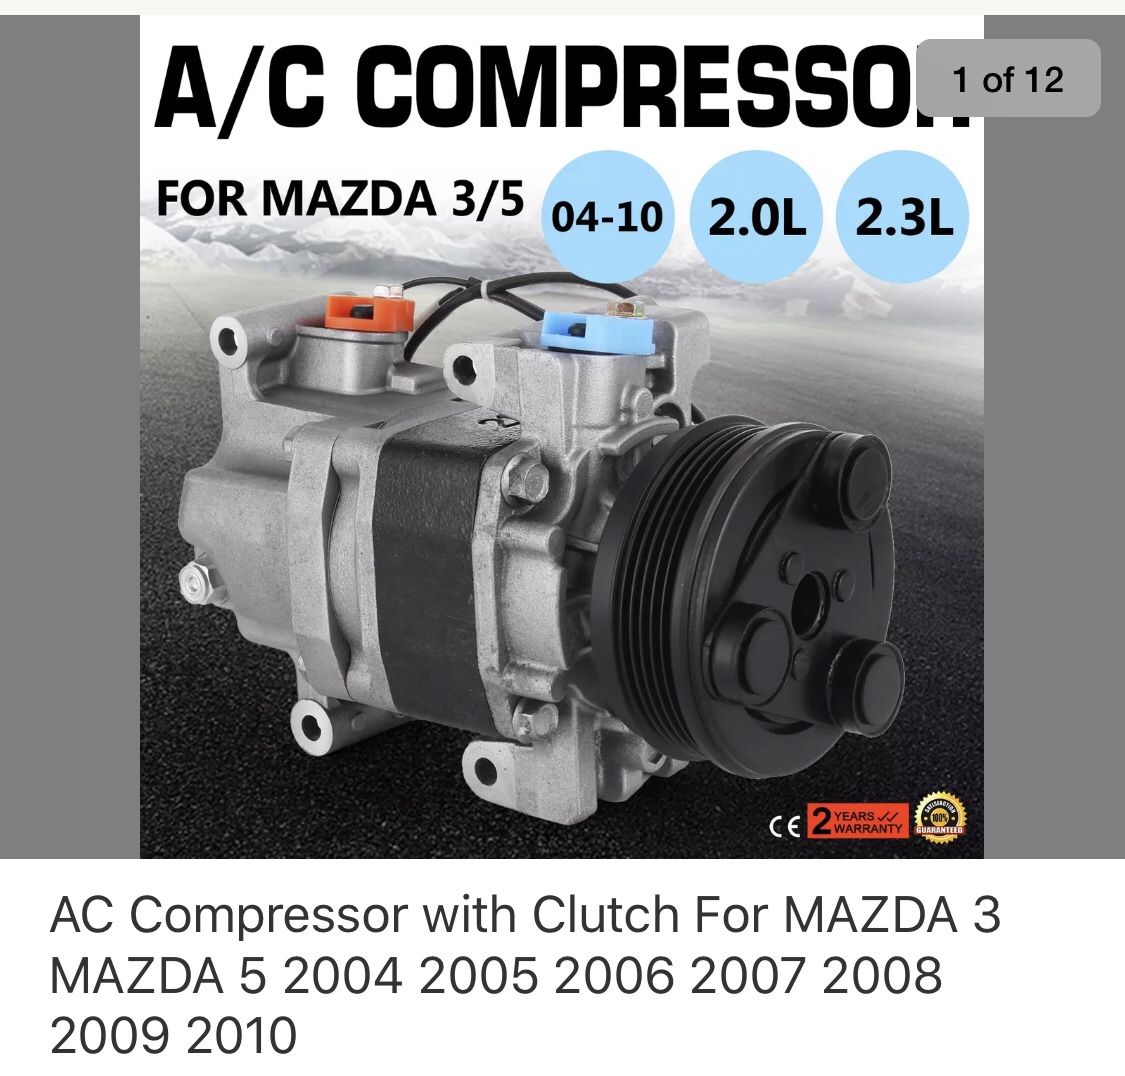 AC Compressor for Mazda 3/5 (2004-2010)